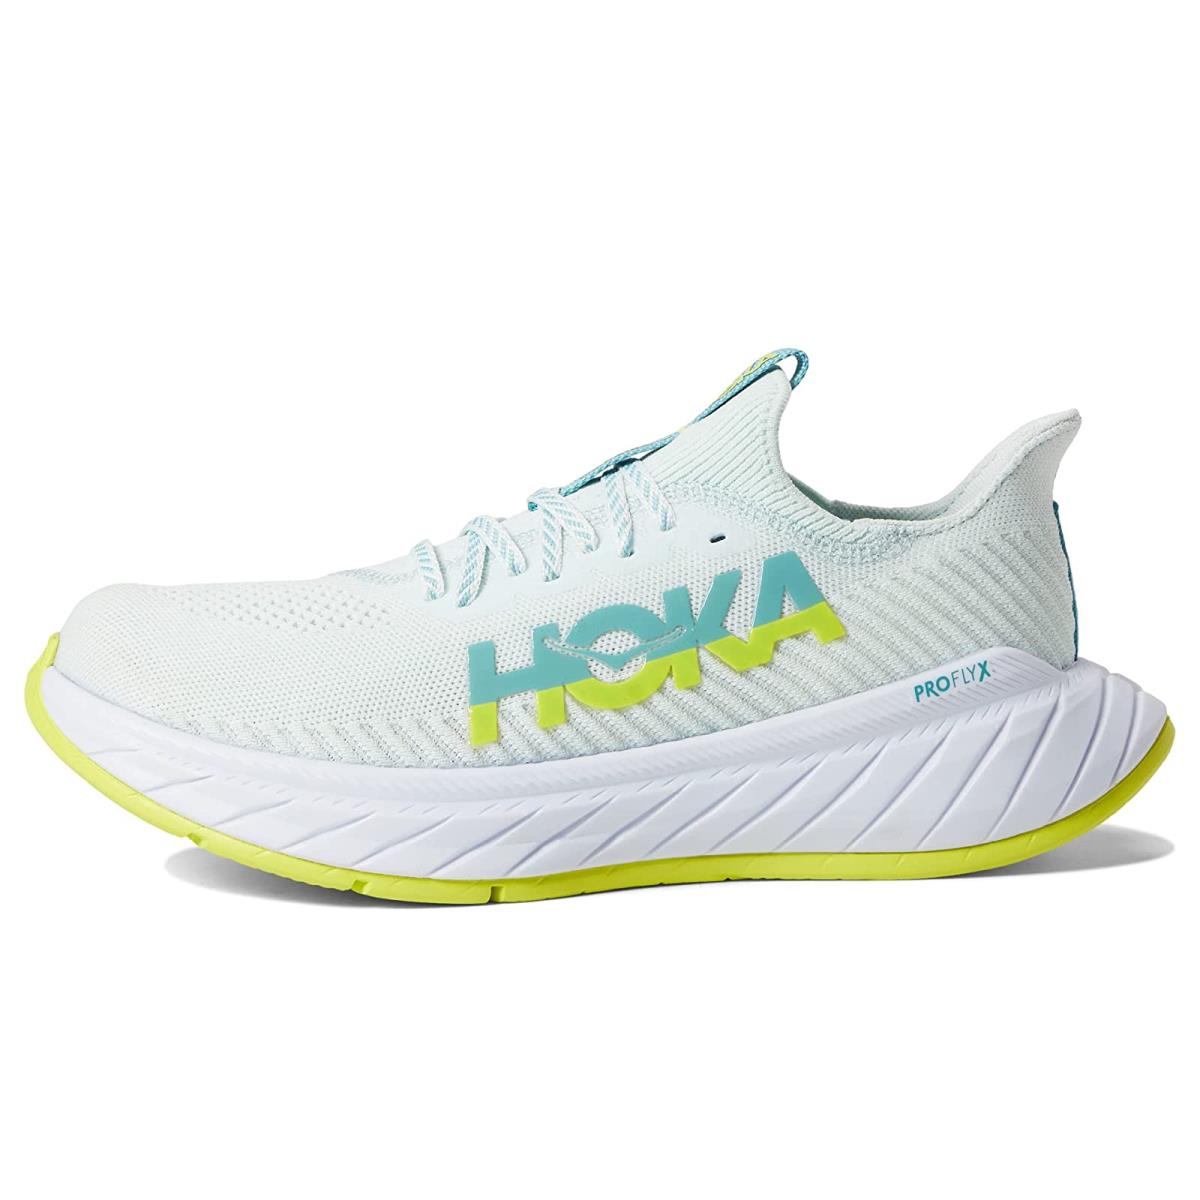 Hoka Carbon X 3 Men's Racing Running Shoe - Billowing Sail / Evening Primrose - Size 13